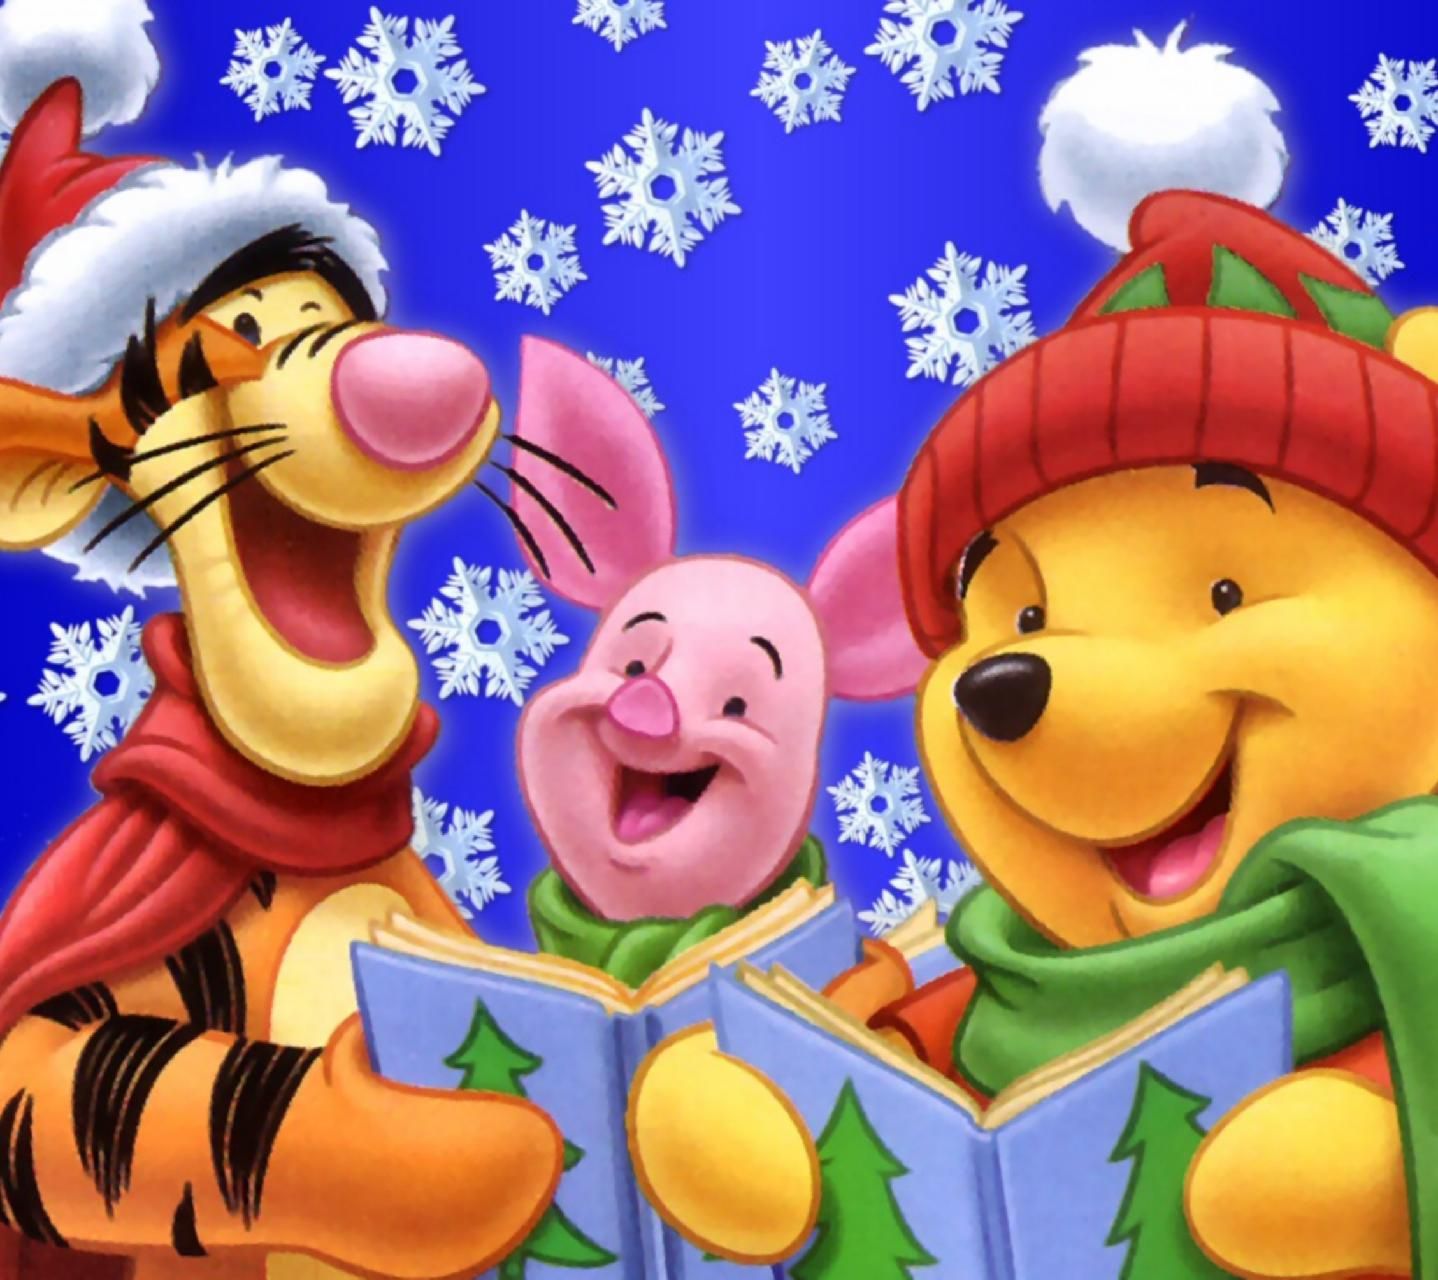 Merry Christmas Winnie The Pooh - HD Wallpaper 